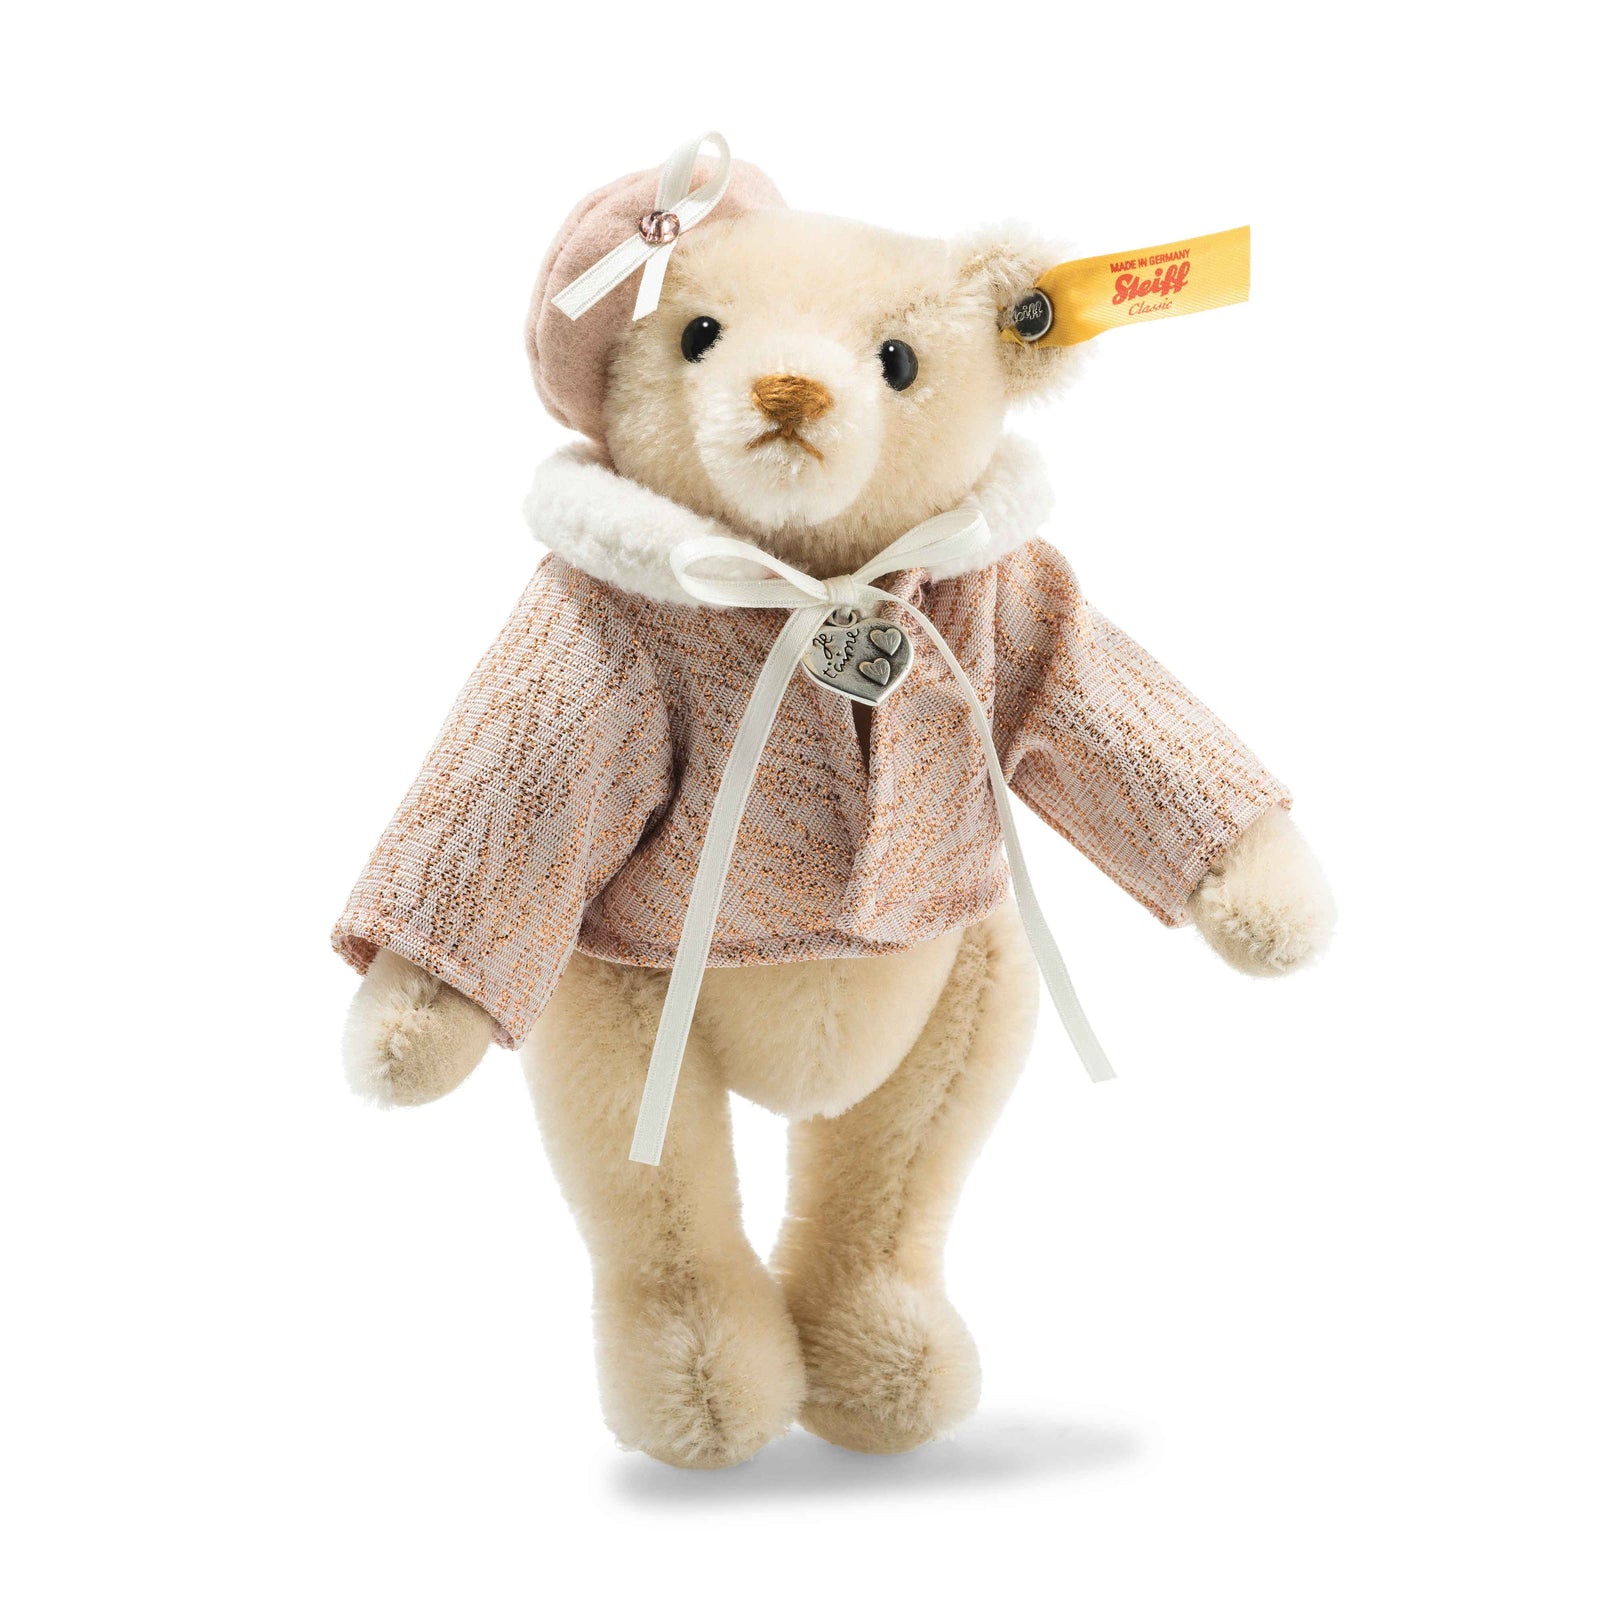 Steiff Great Escapes Paris Teddy Bear in Gift Box - EAN 026881